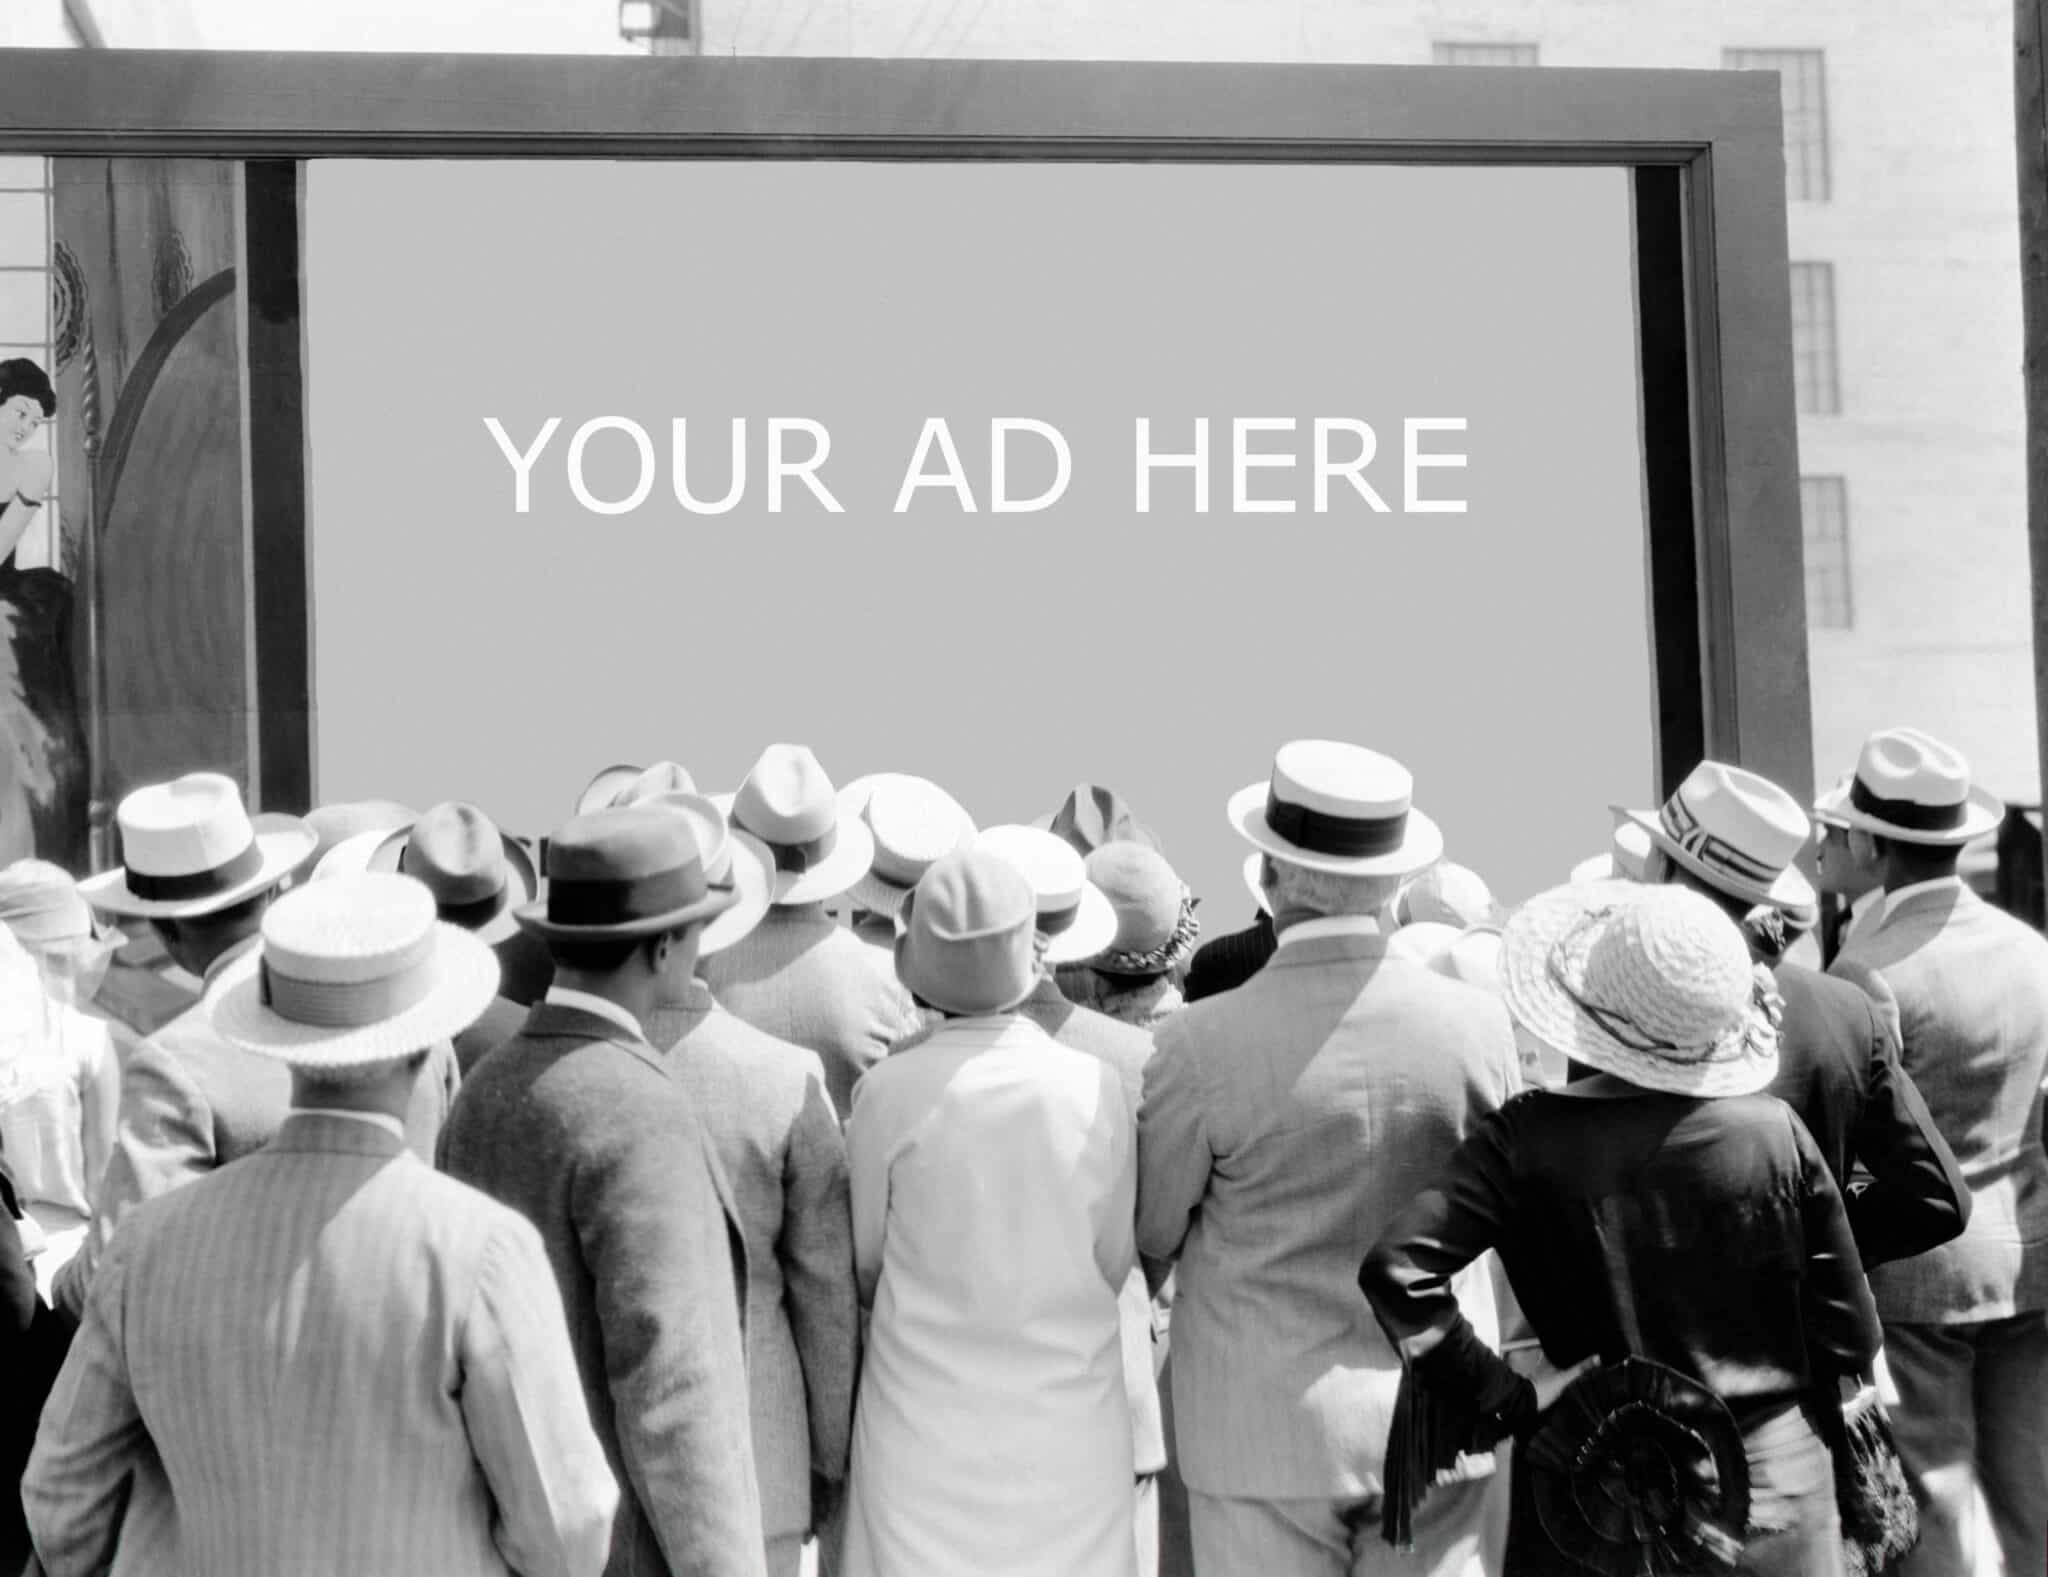 Marketing vs. Advertising